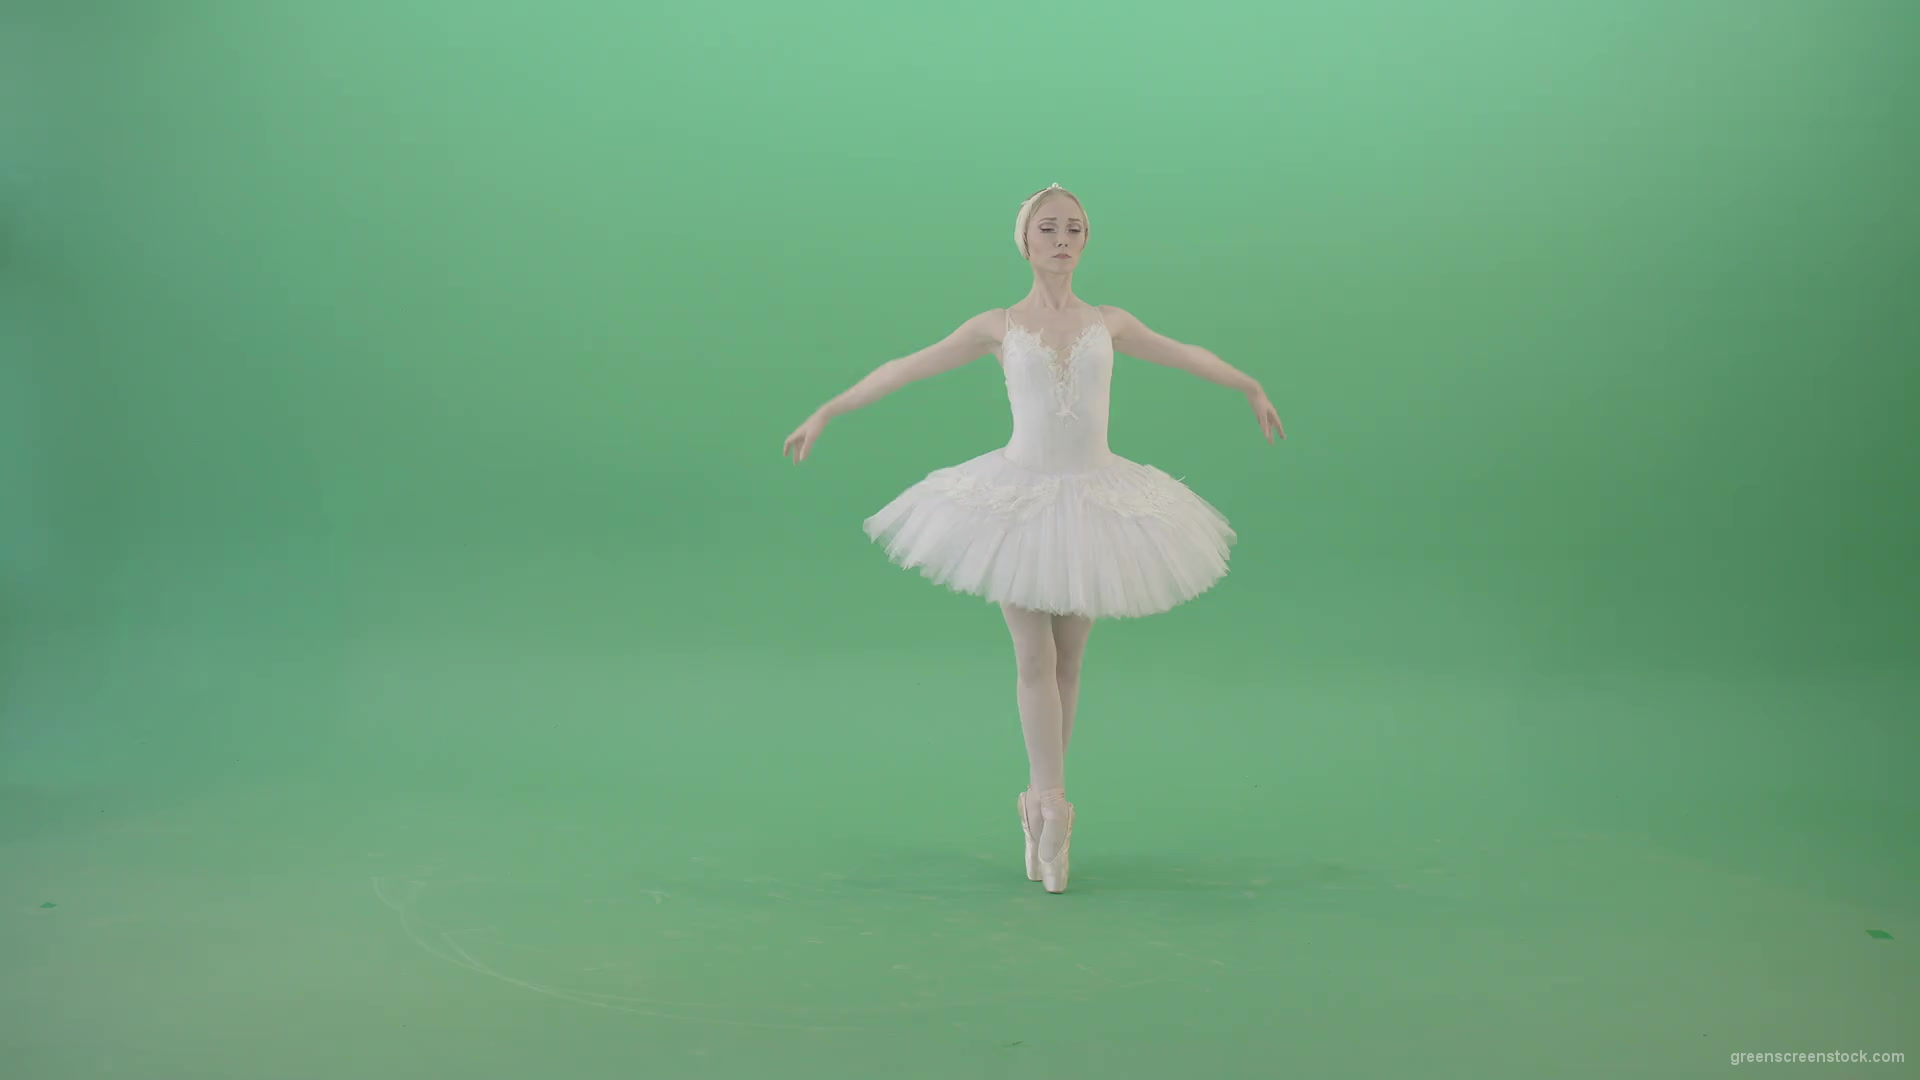 Grace-Ballerina-dance-classical-ballet-art-in-white-costume-on-green-screen-4K-Video-Footage-1920_001 Green Screen Stock